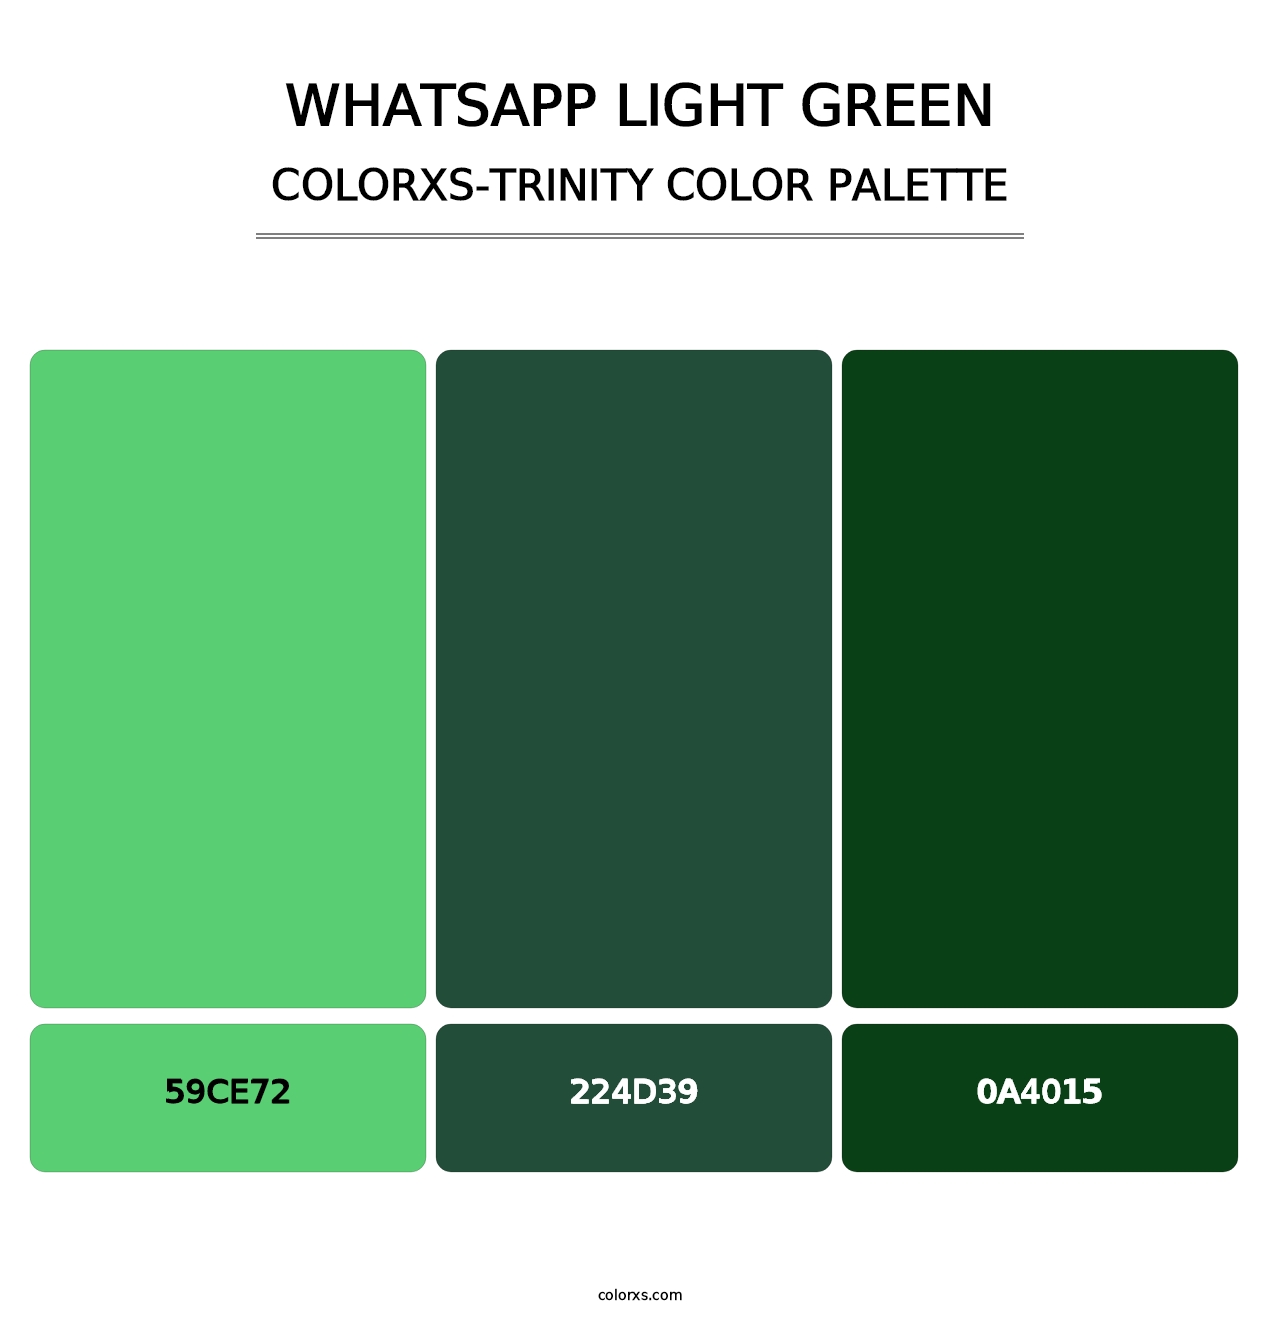 WhatsApp Light Green - Colorxs Trinity Palette